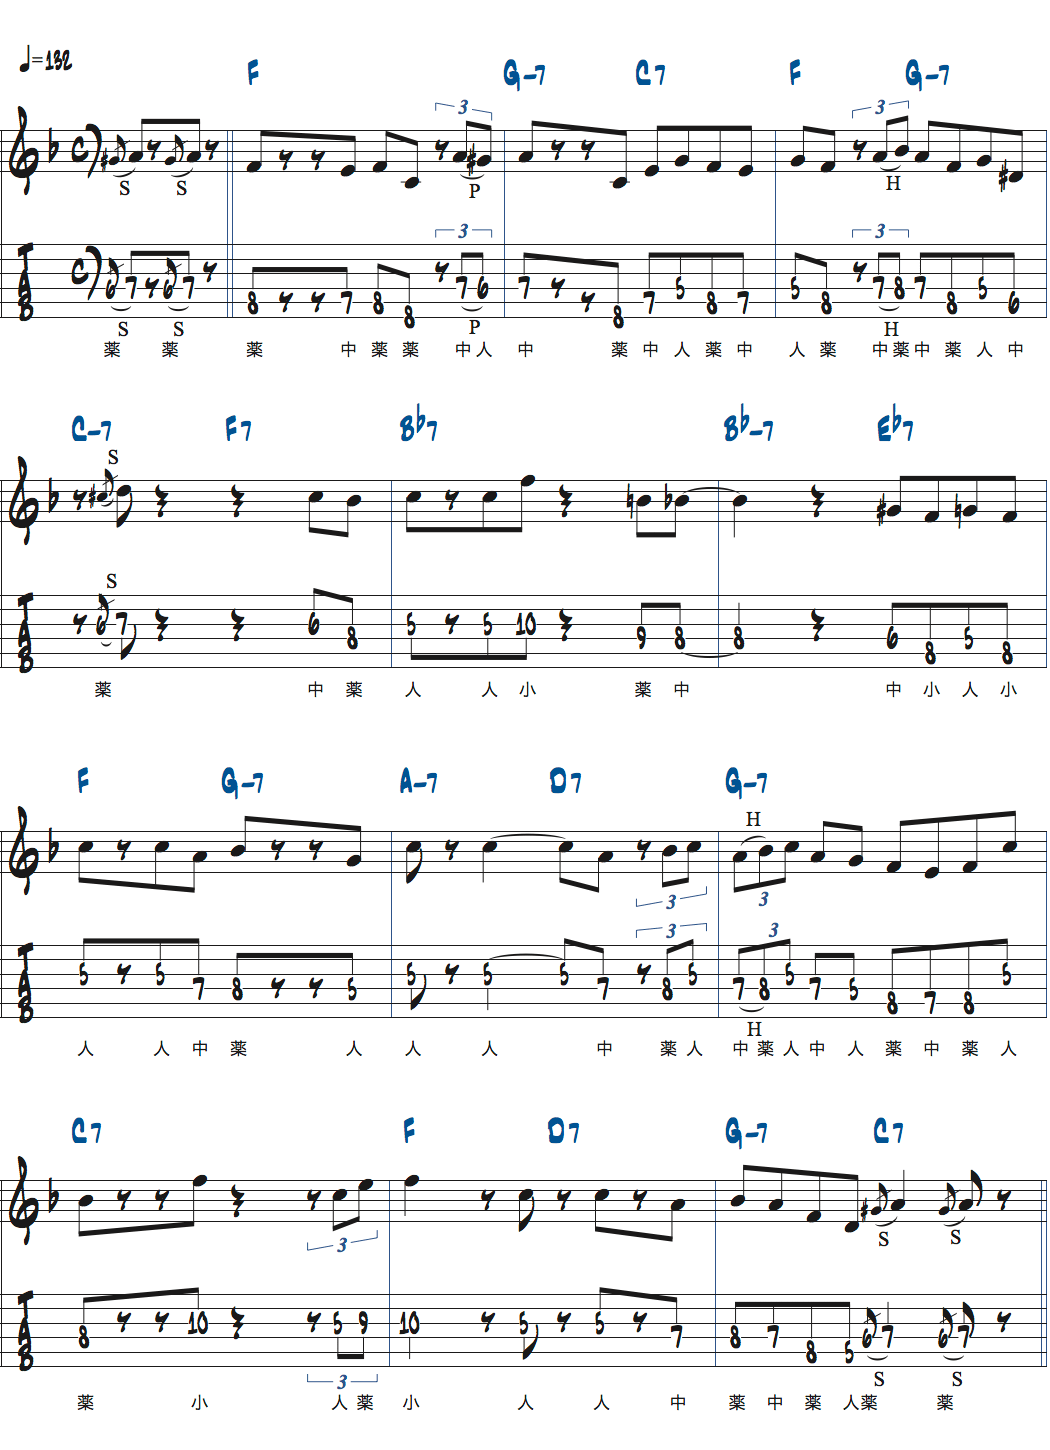 Romain Pilonが弾くリズムを変化させたAu Privave楽譜ページ1